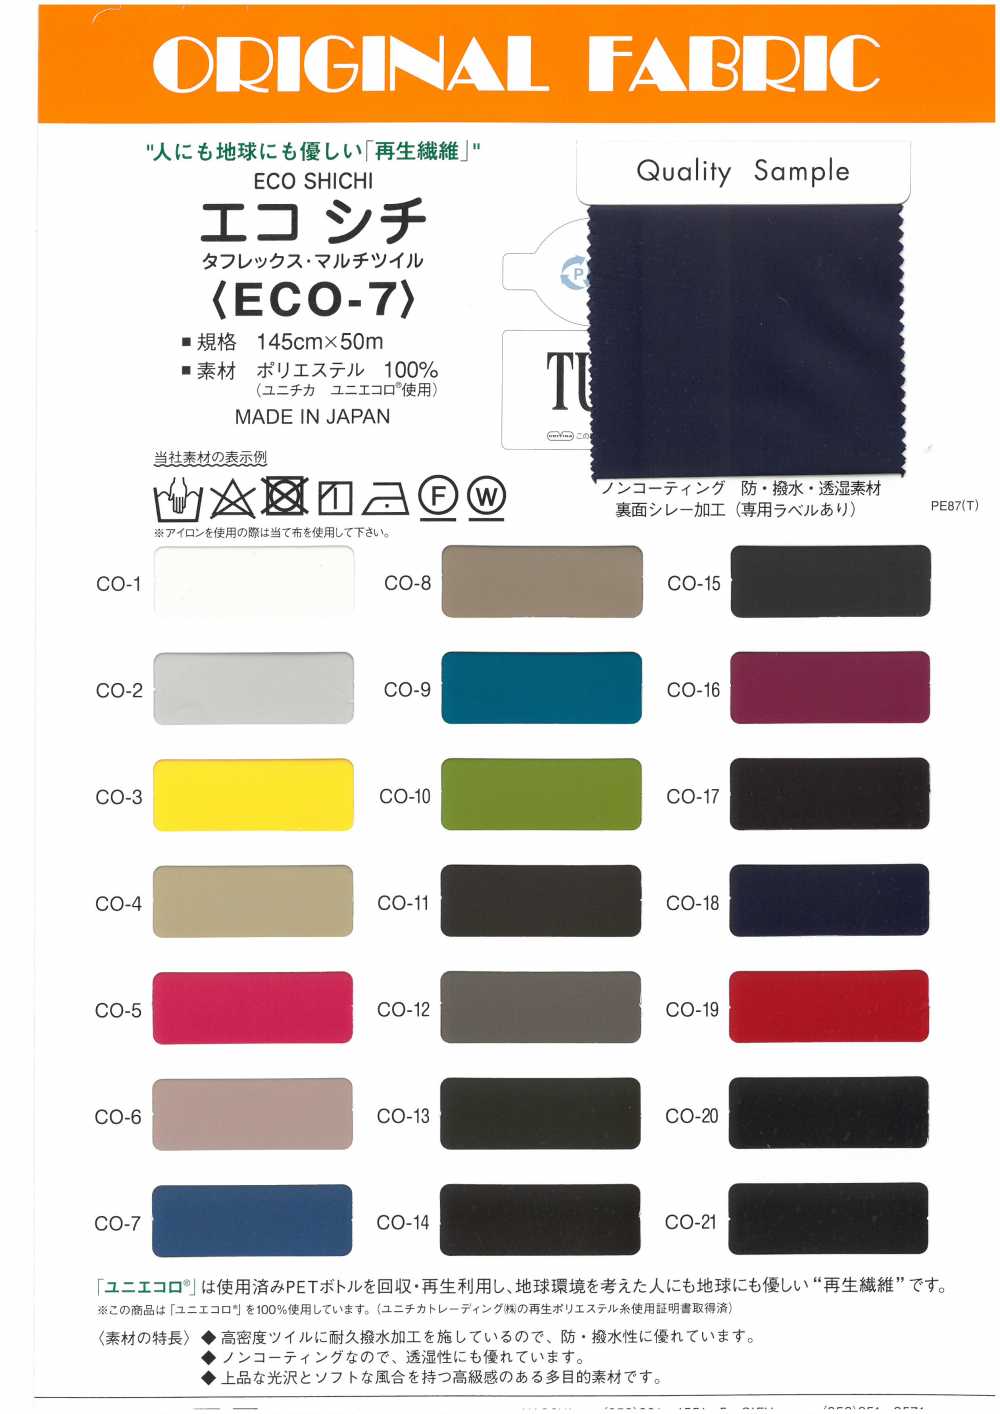 ECO-7 Eco-Citi &lt;Taflex Multi-Twill&gt;[Vải] Masuda (Masuda)